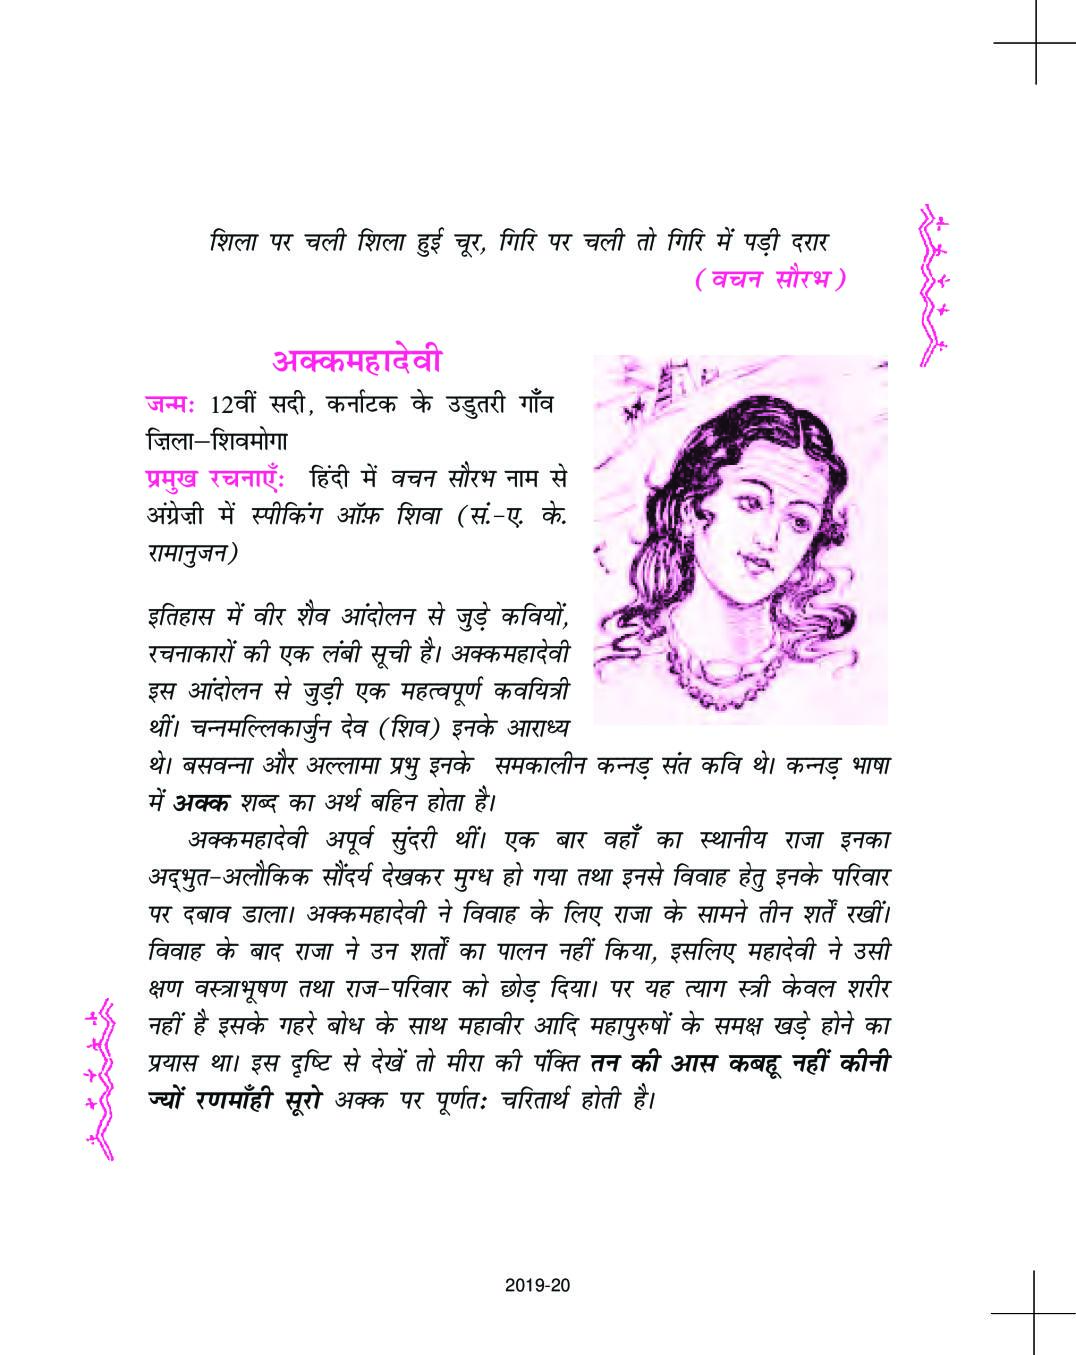 NCERT Book Class 11 Hindi (आरोह) Chapter 18 अक्कमहादेवी - Page 1